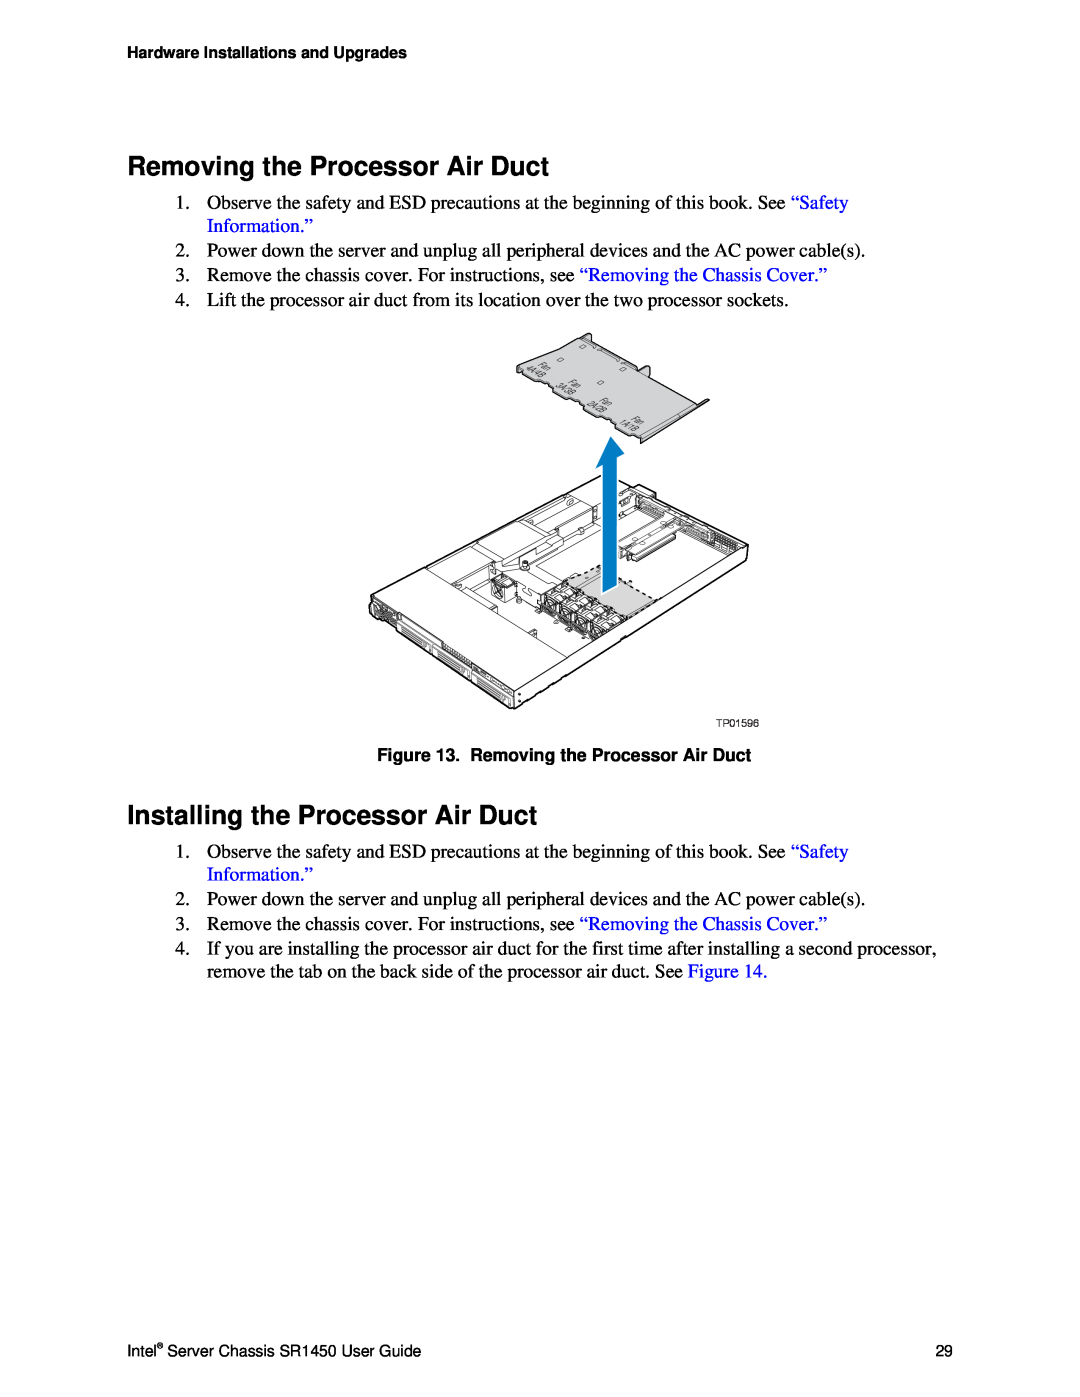 Intel SR1450 manual Removing the Processor Air Duct, Installing the Processor Air Duct 